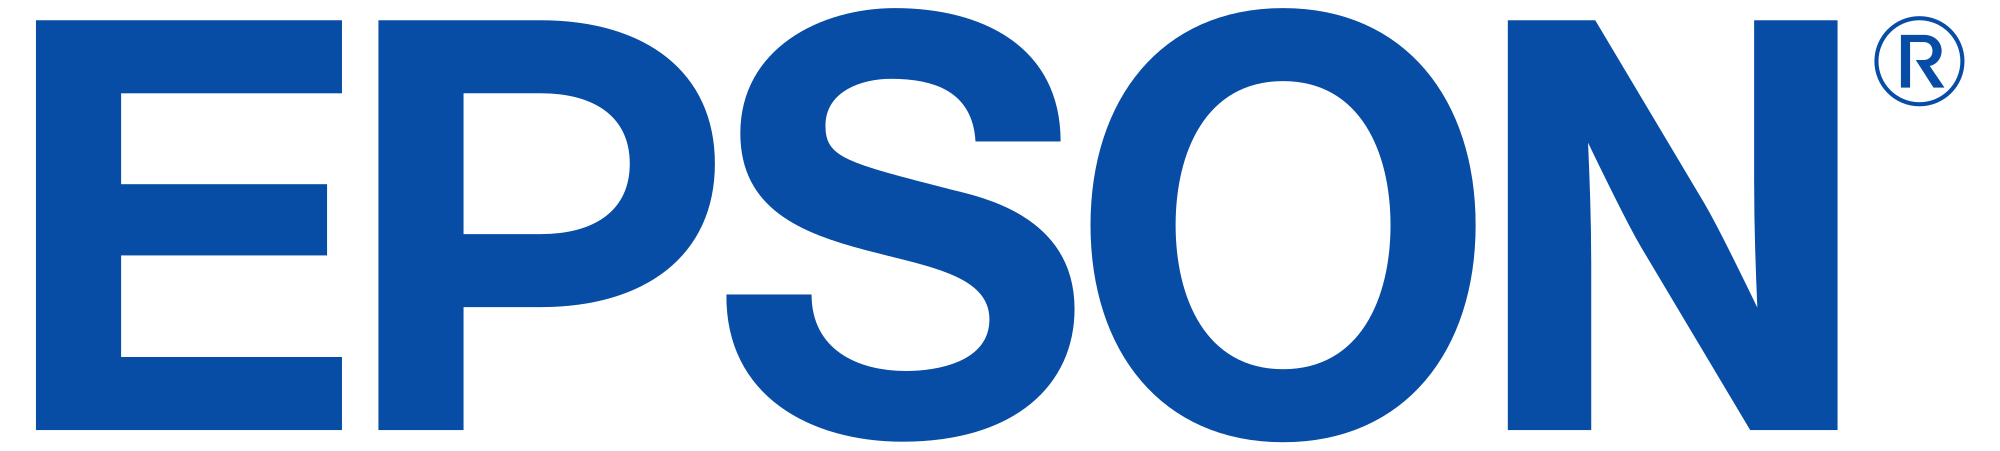 EPSON-Logo.svg